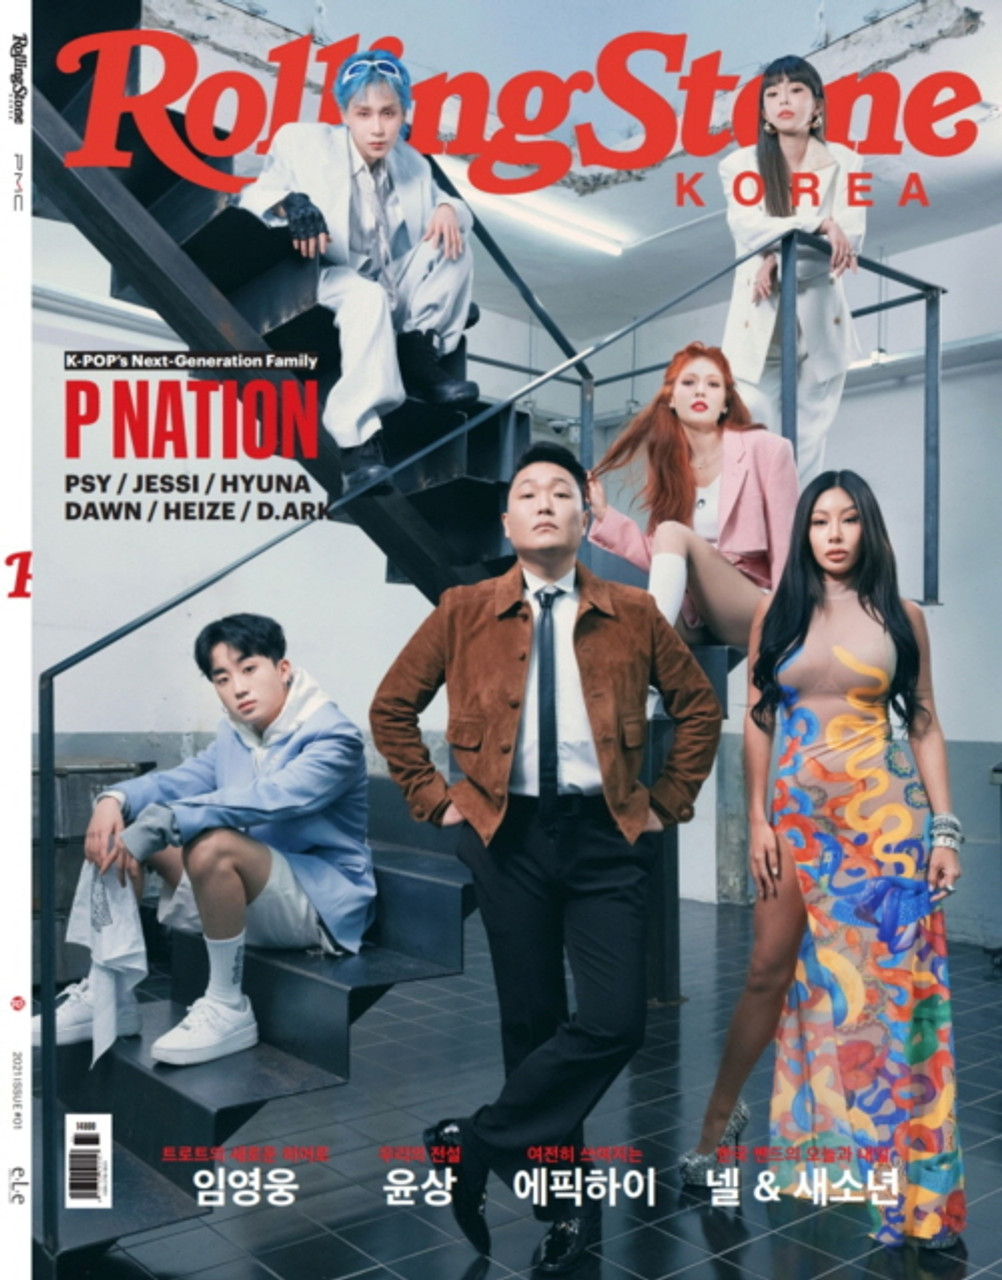 Rolling Stone Korea P Nation Cover 210506 Interasia